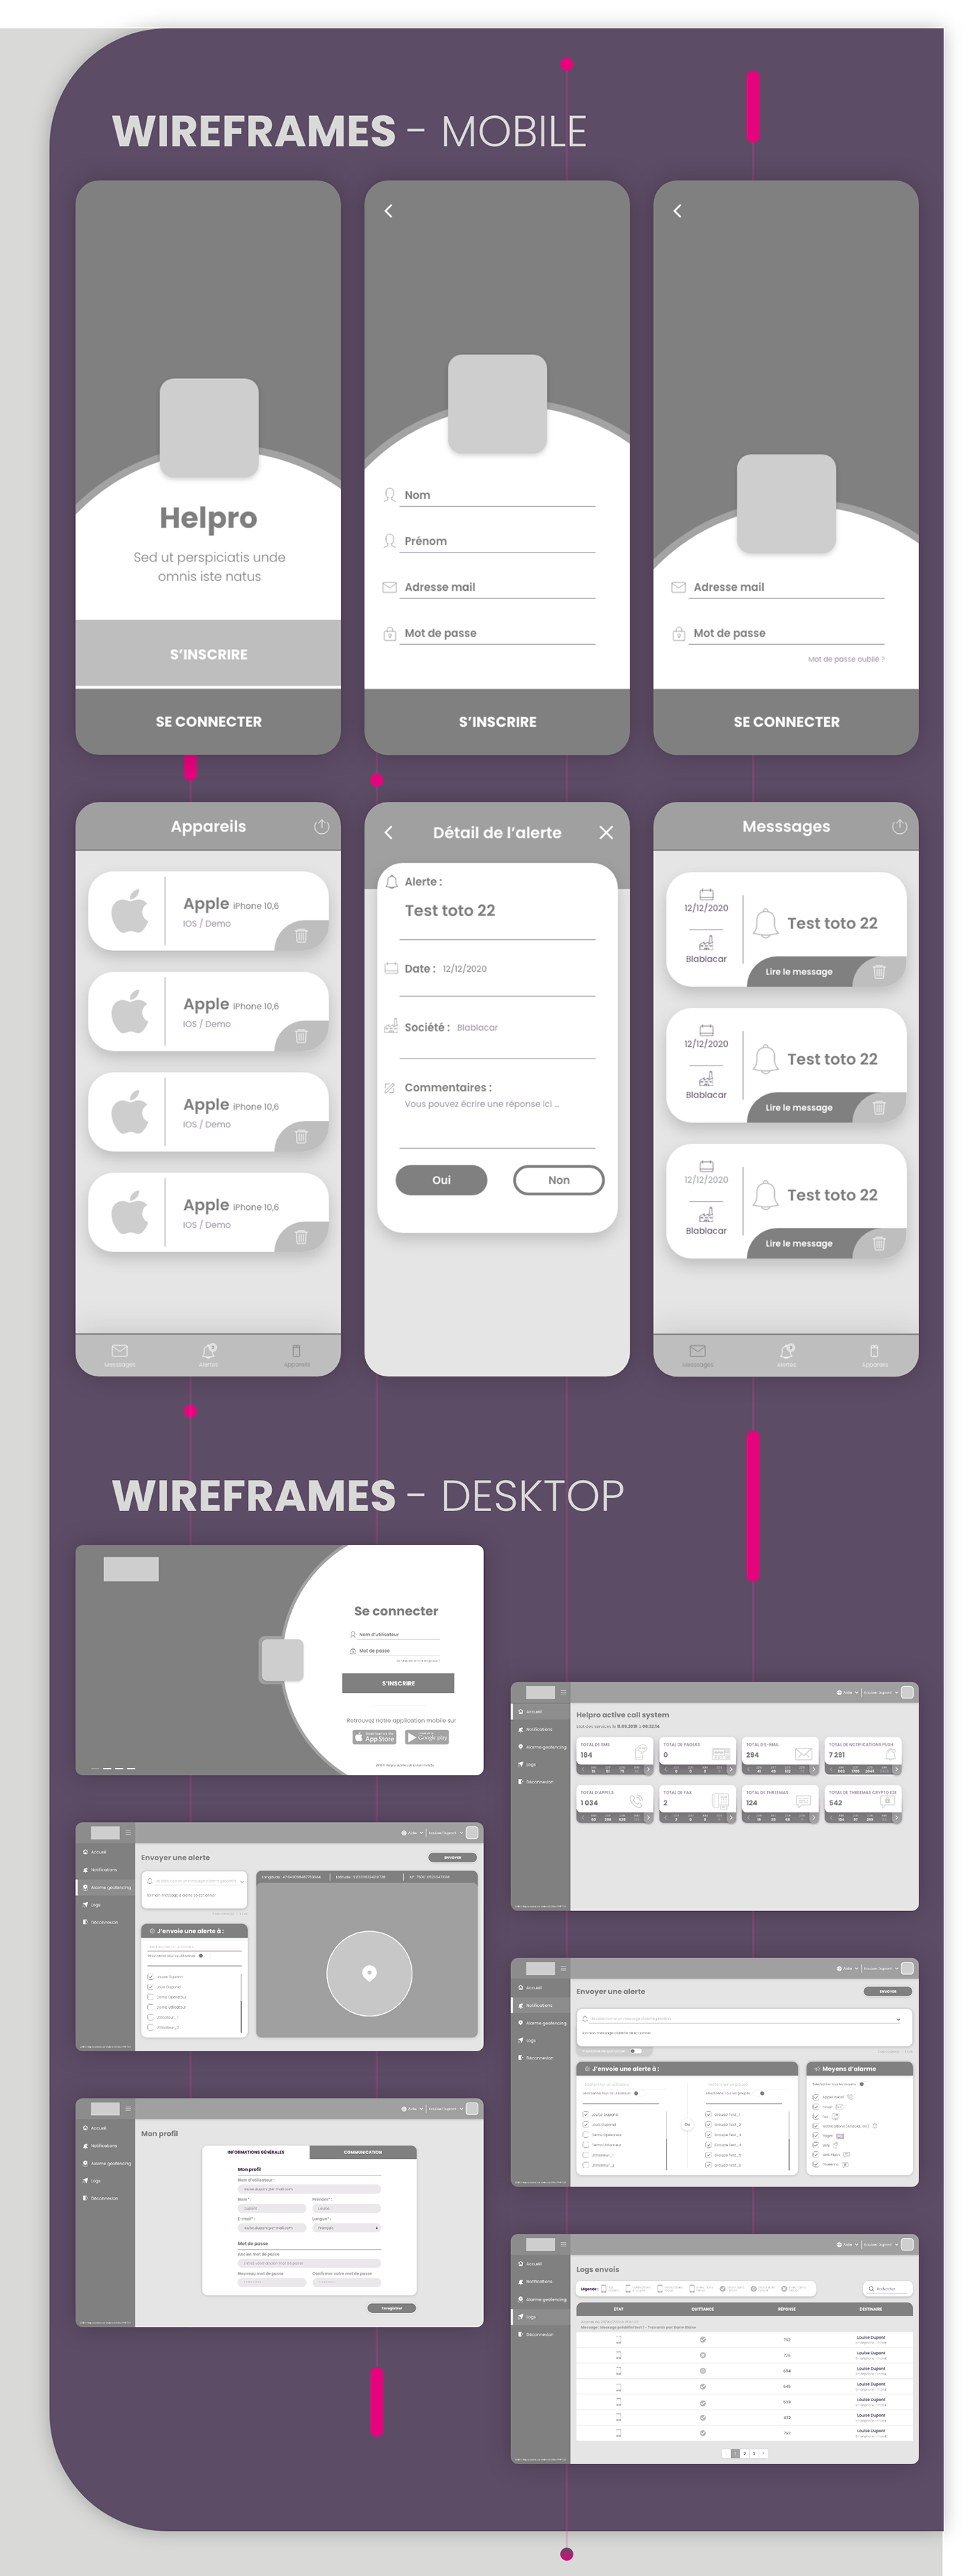 design help helpro interfaces redesign UI/UX Design wireframes